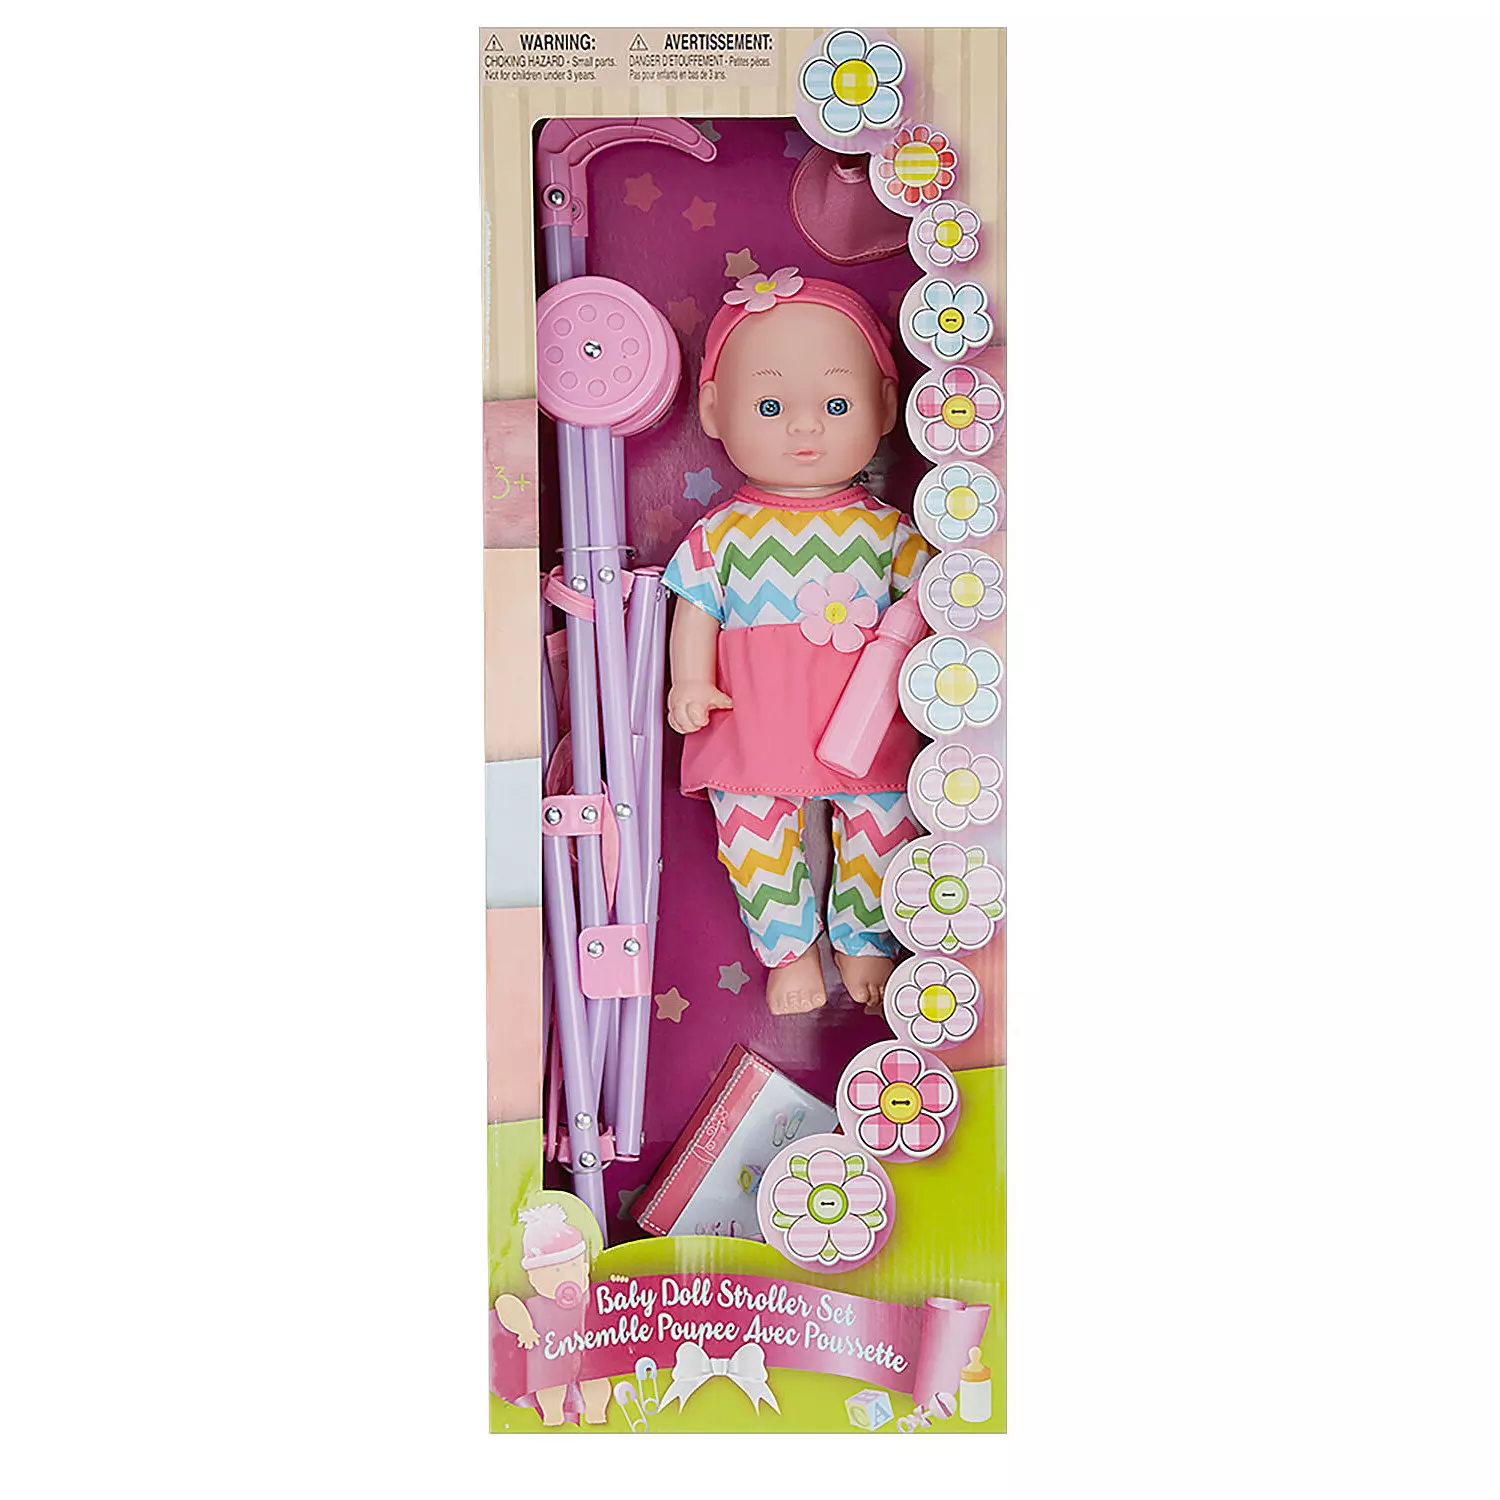 Baby doll stroller set